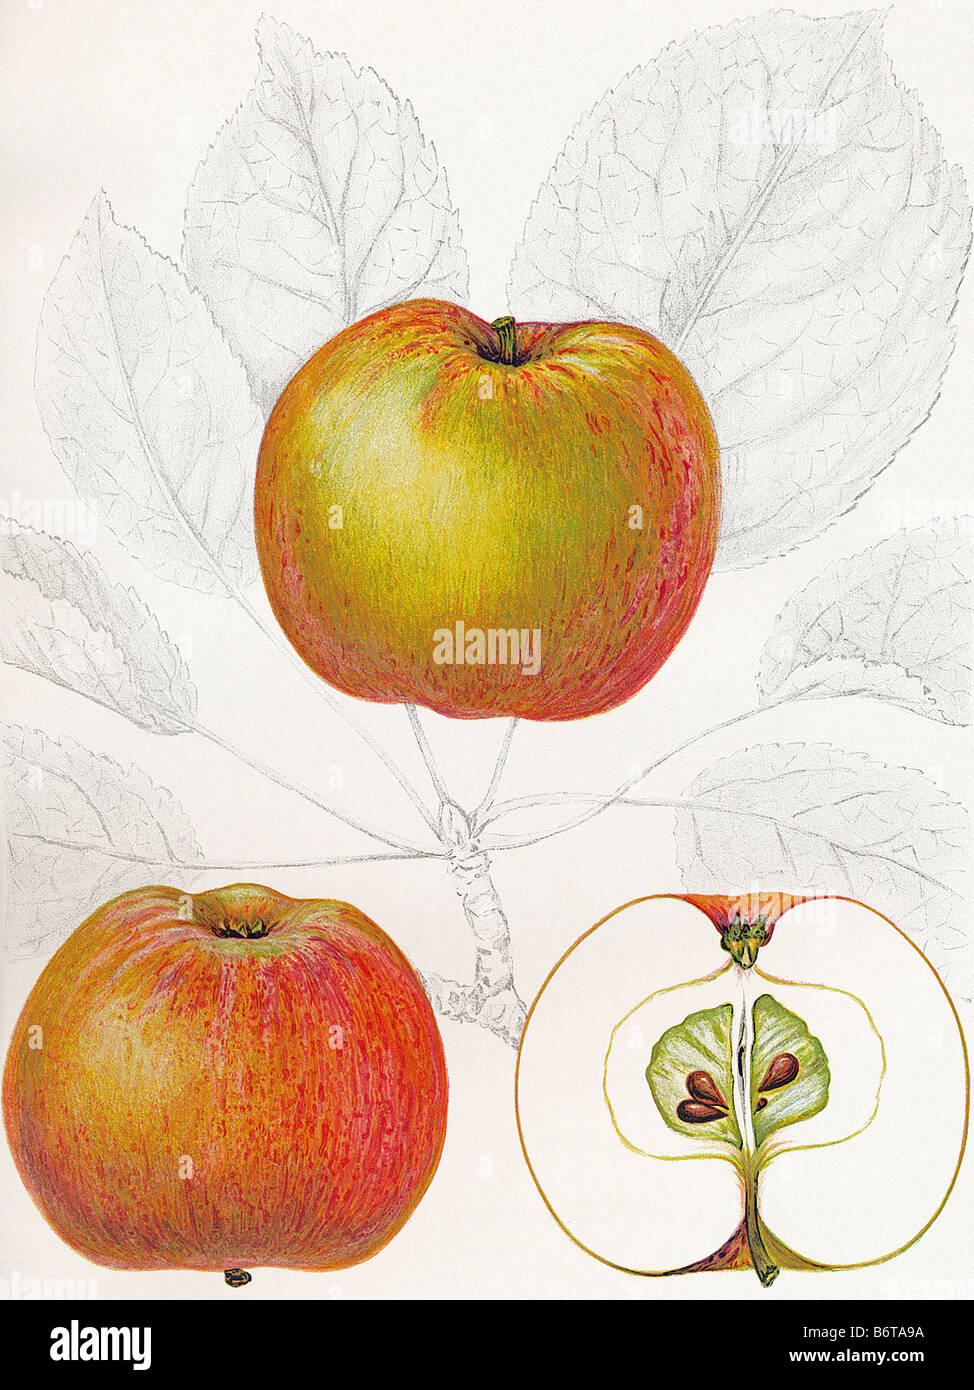 Illustration of the apple charlamowsky Stock Photo